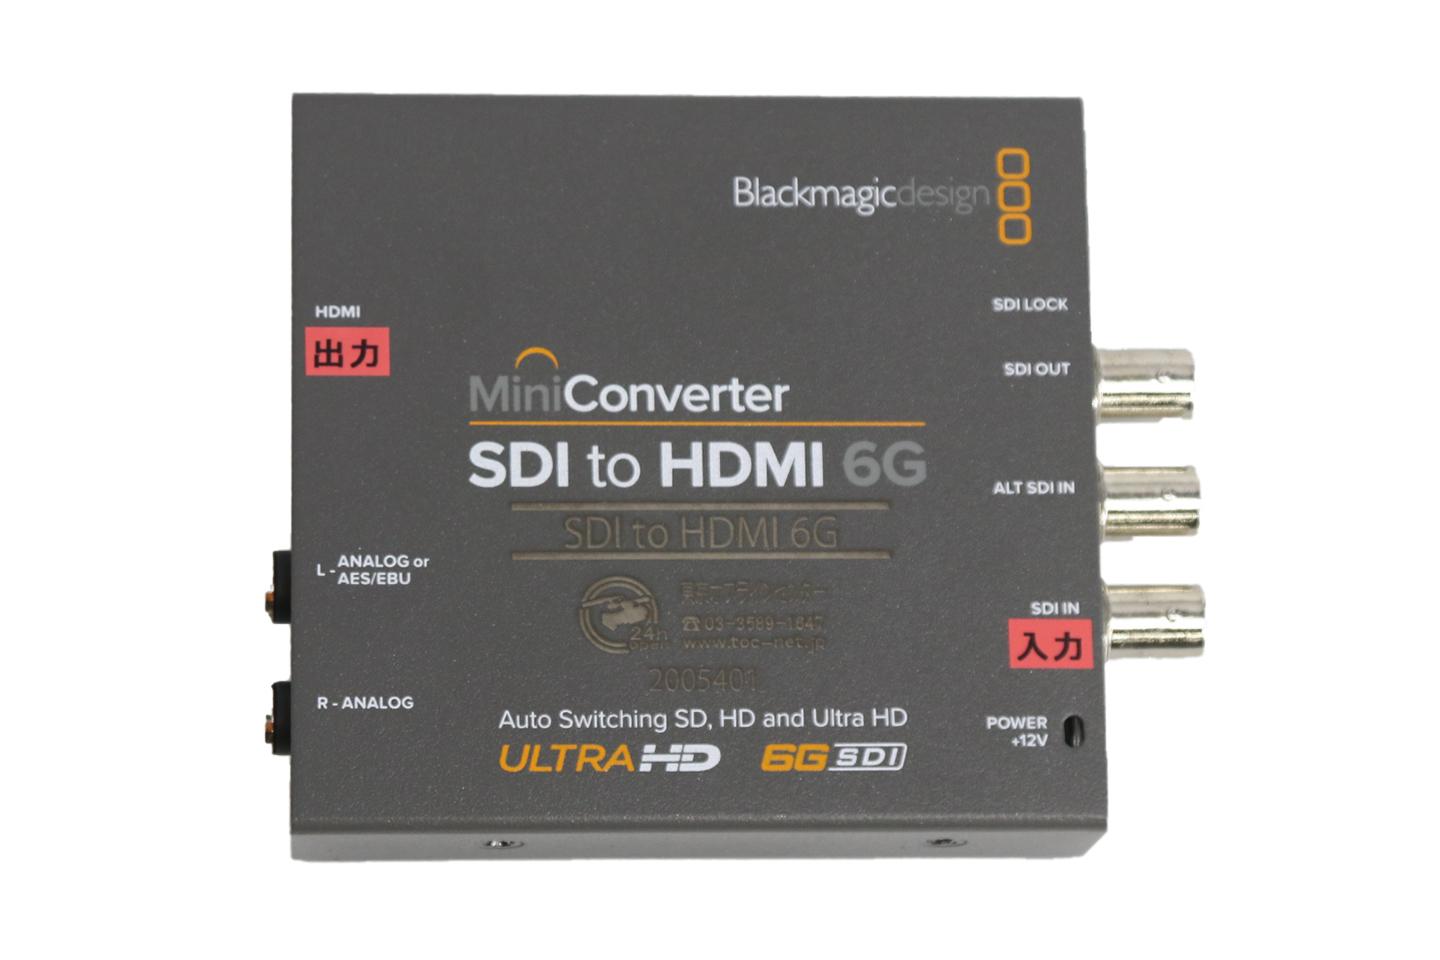 Blackmagic Design SDI to HDMI 6G(miniConverter)